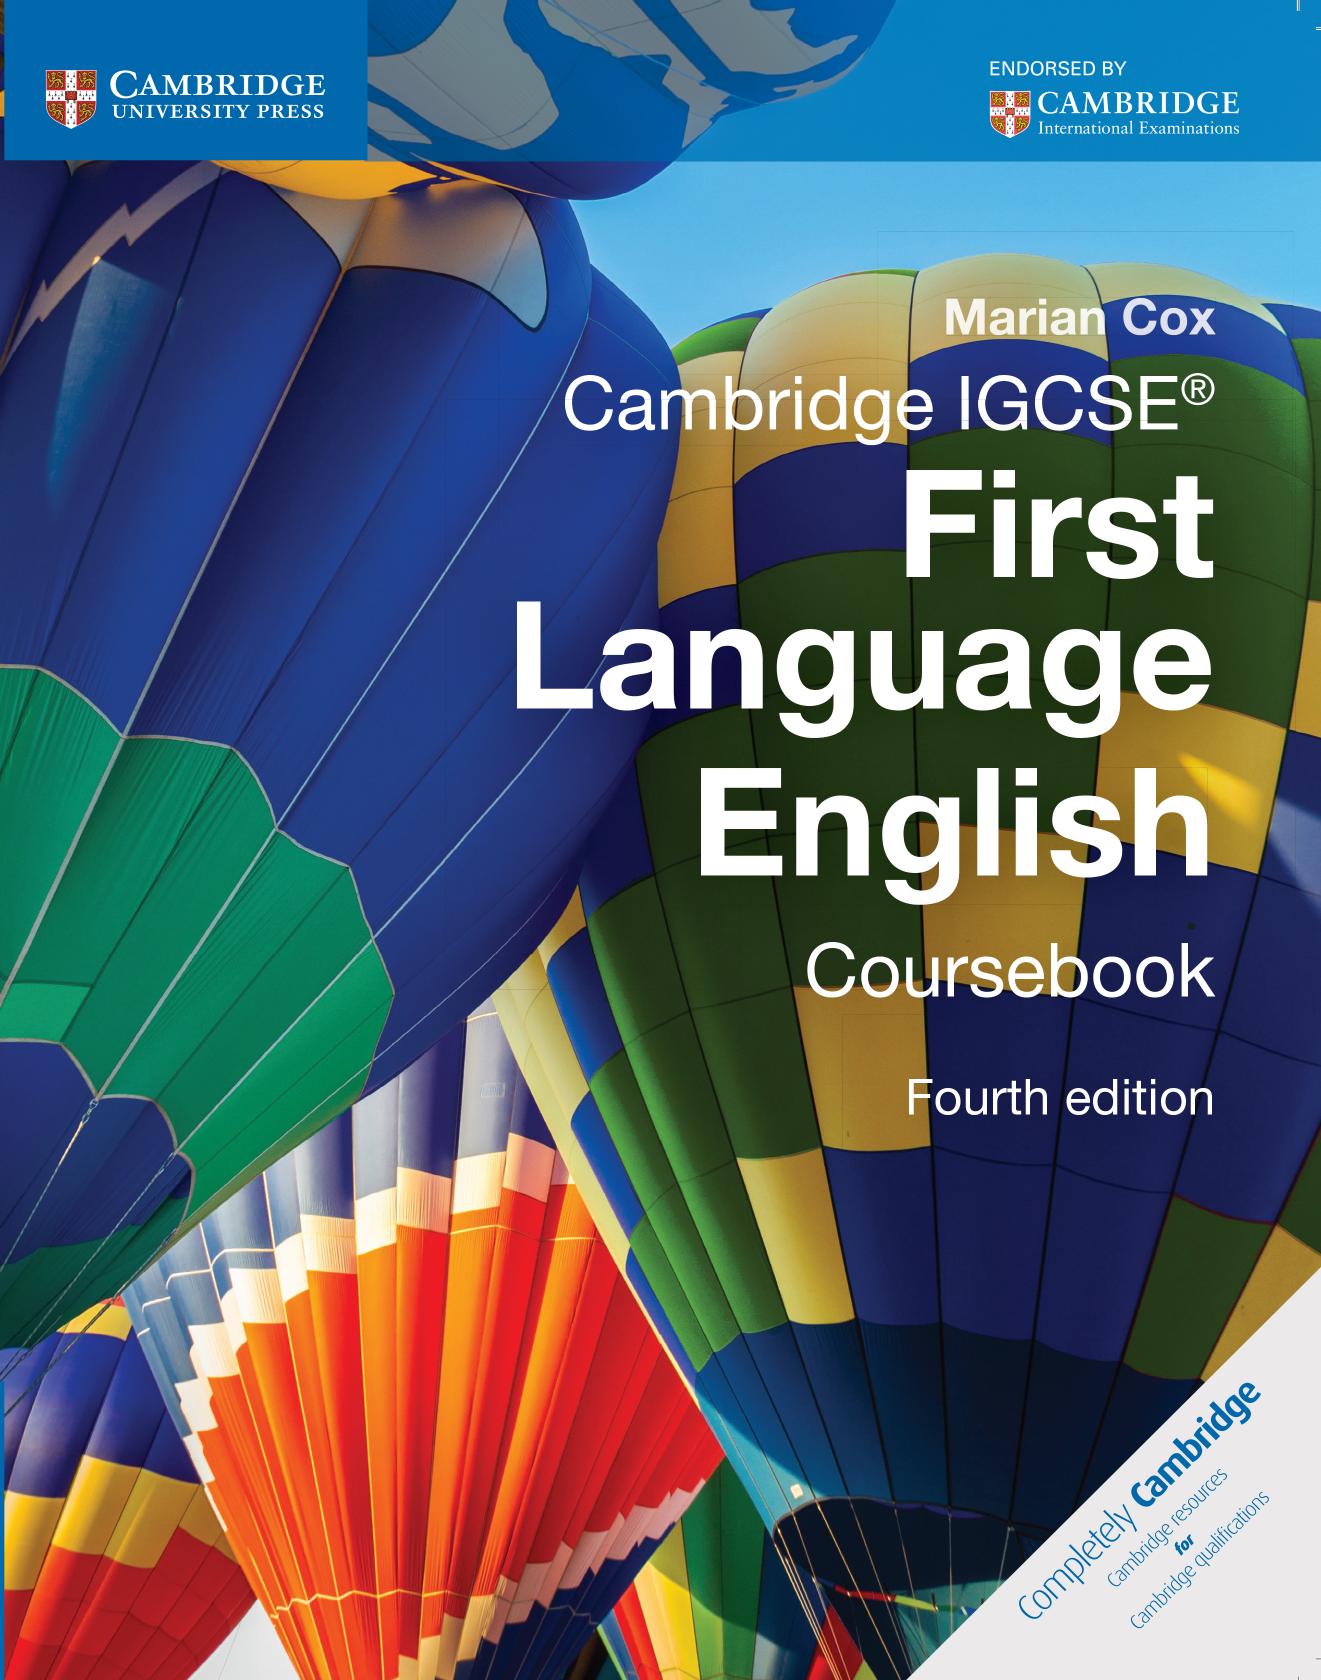 Cambridge IGCSE First Language English Coursebook with Free Digital Content